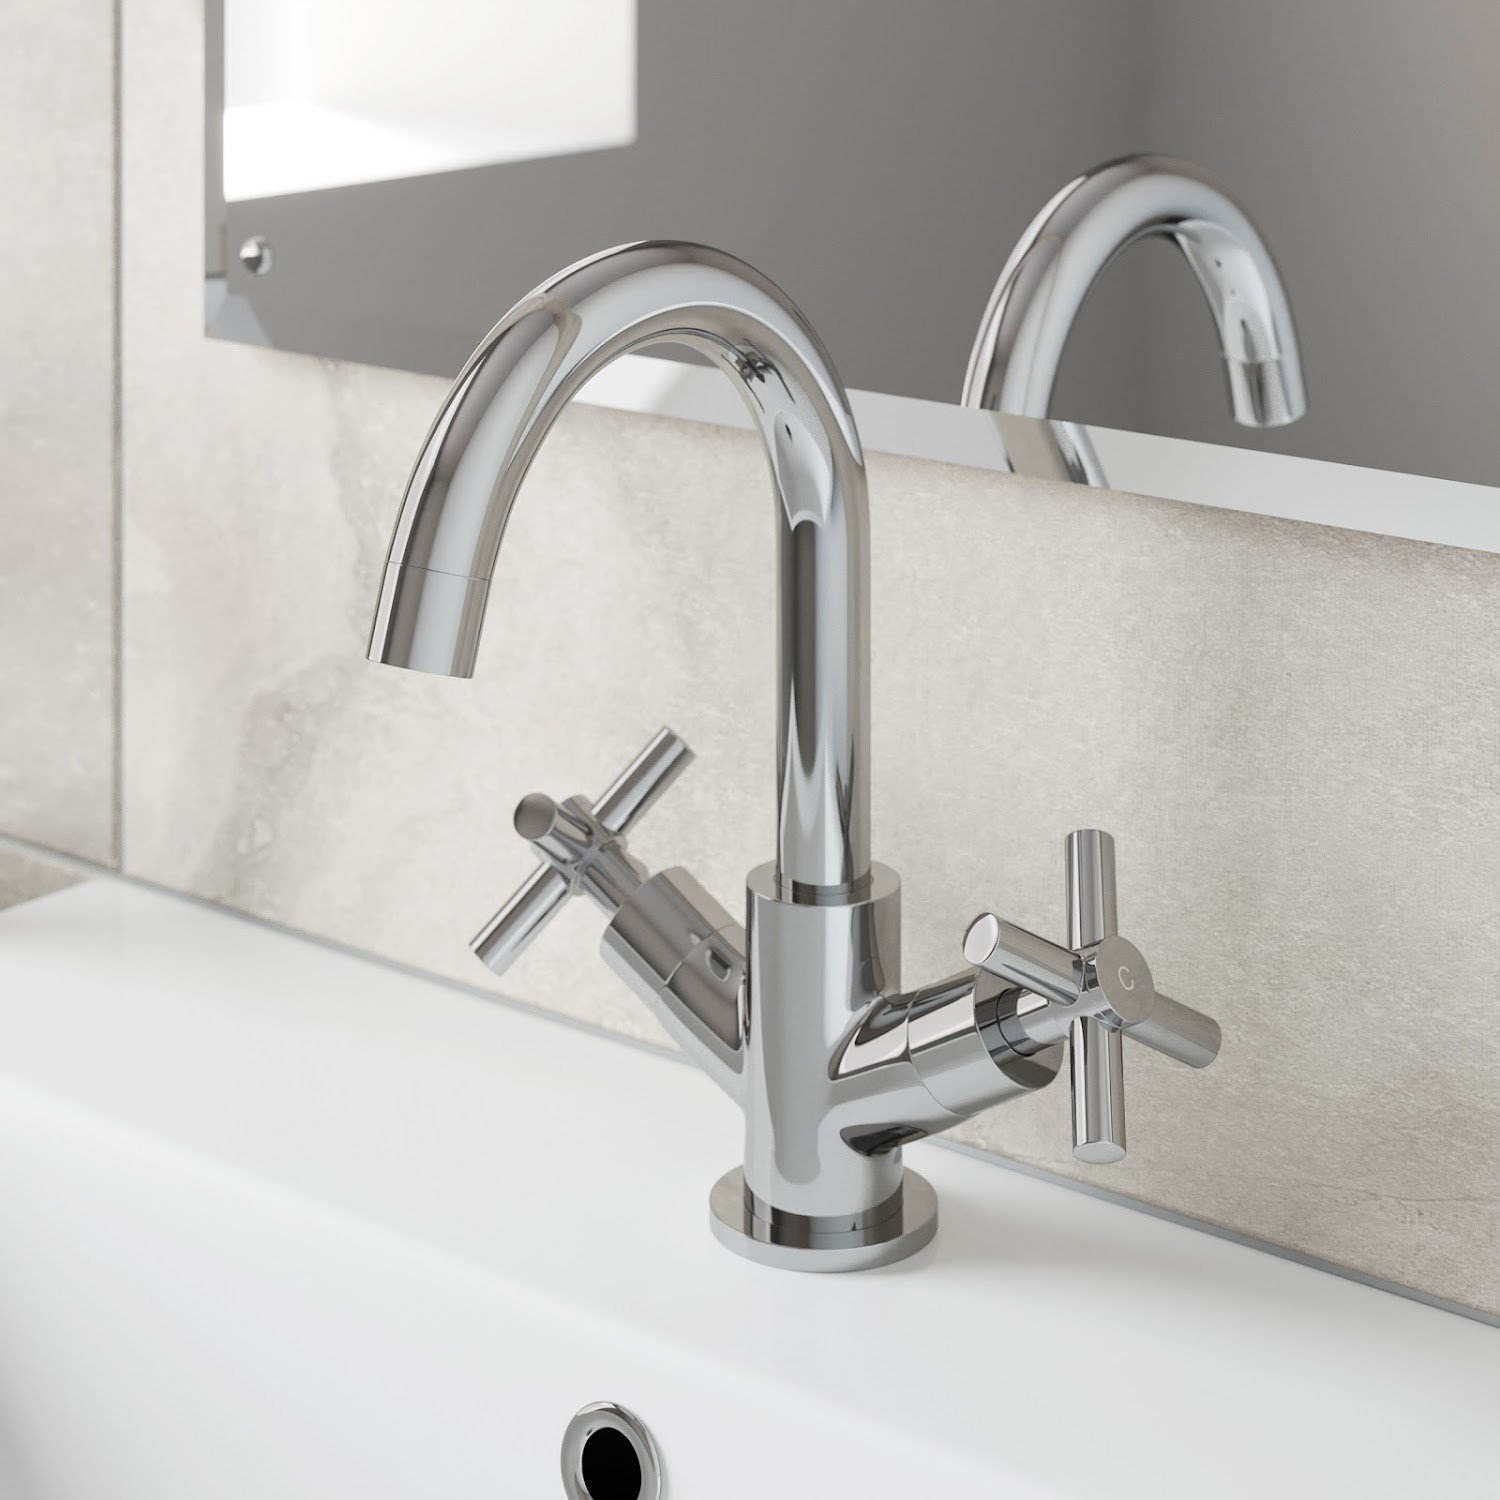 Bathroom Mono Basin Sink Mixer Tap Modern Cross Head Handle Chrome Curved Spout Ebay